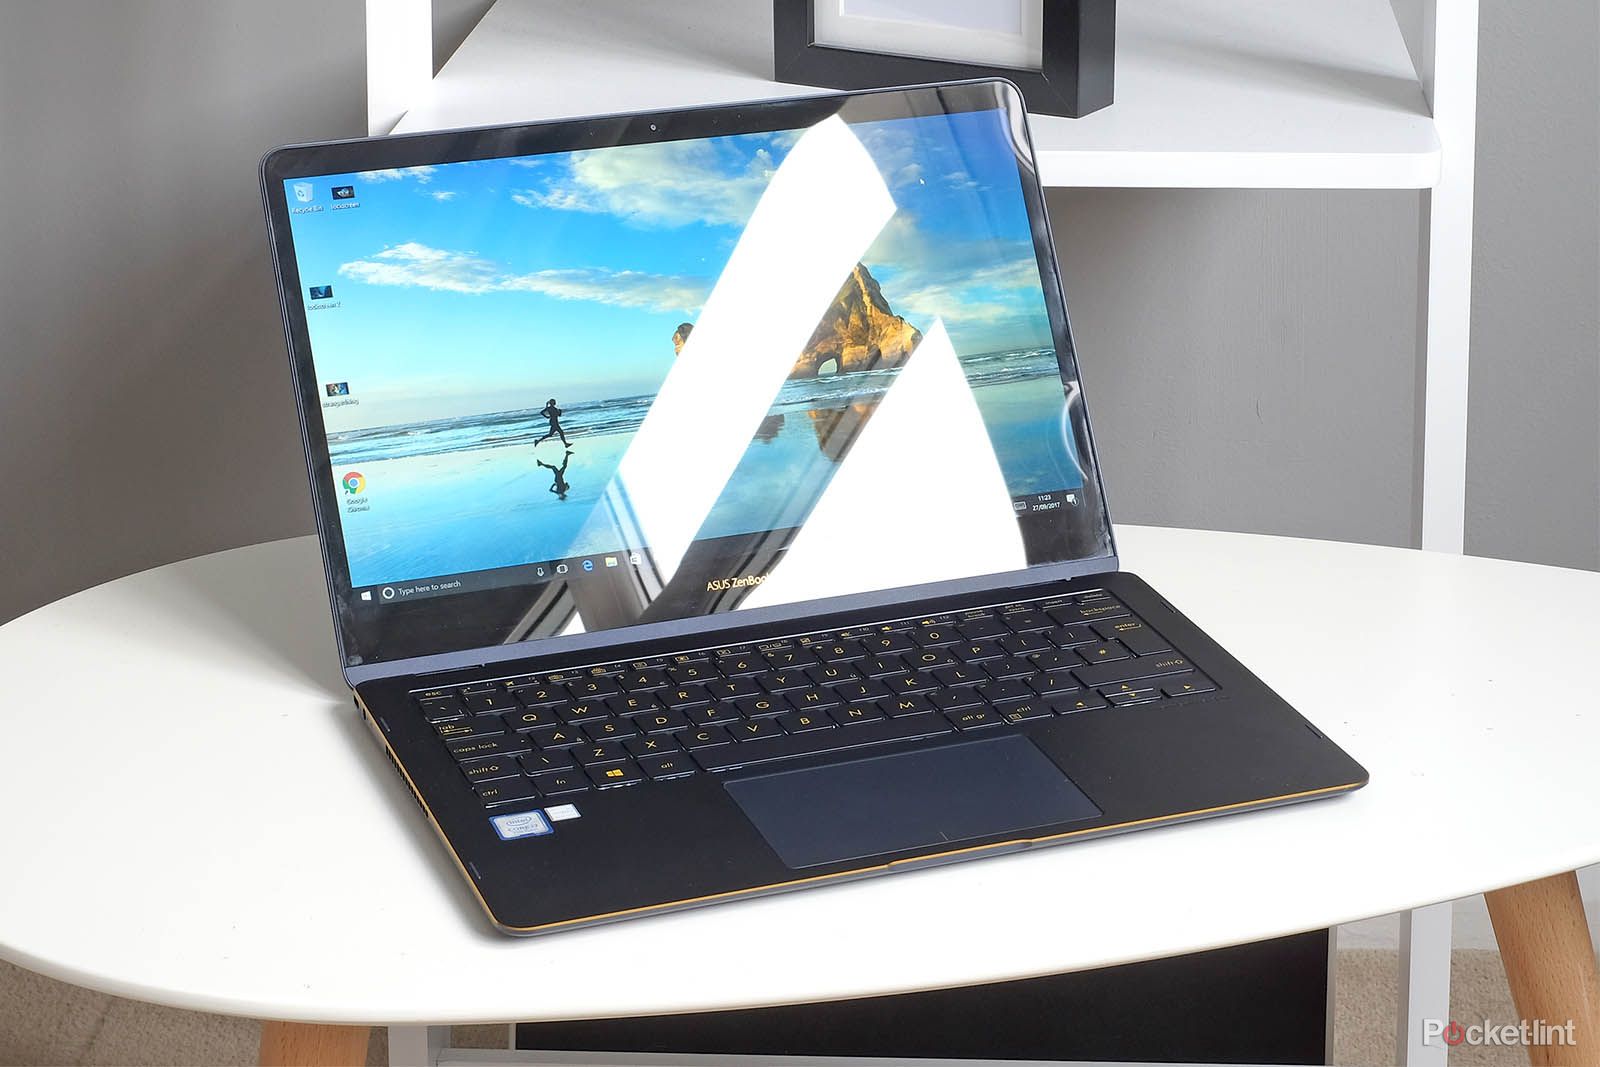 Asus ZenBook Flip S review image 8